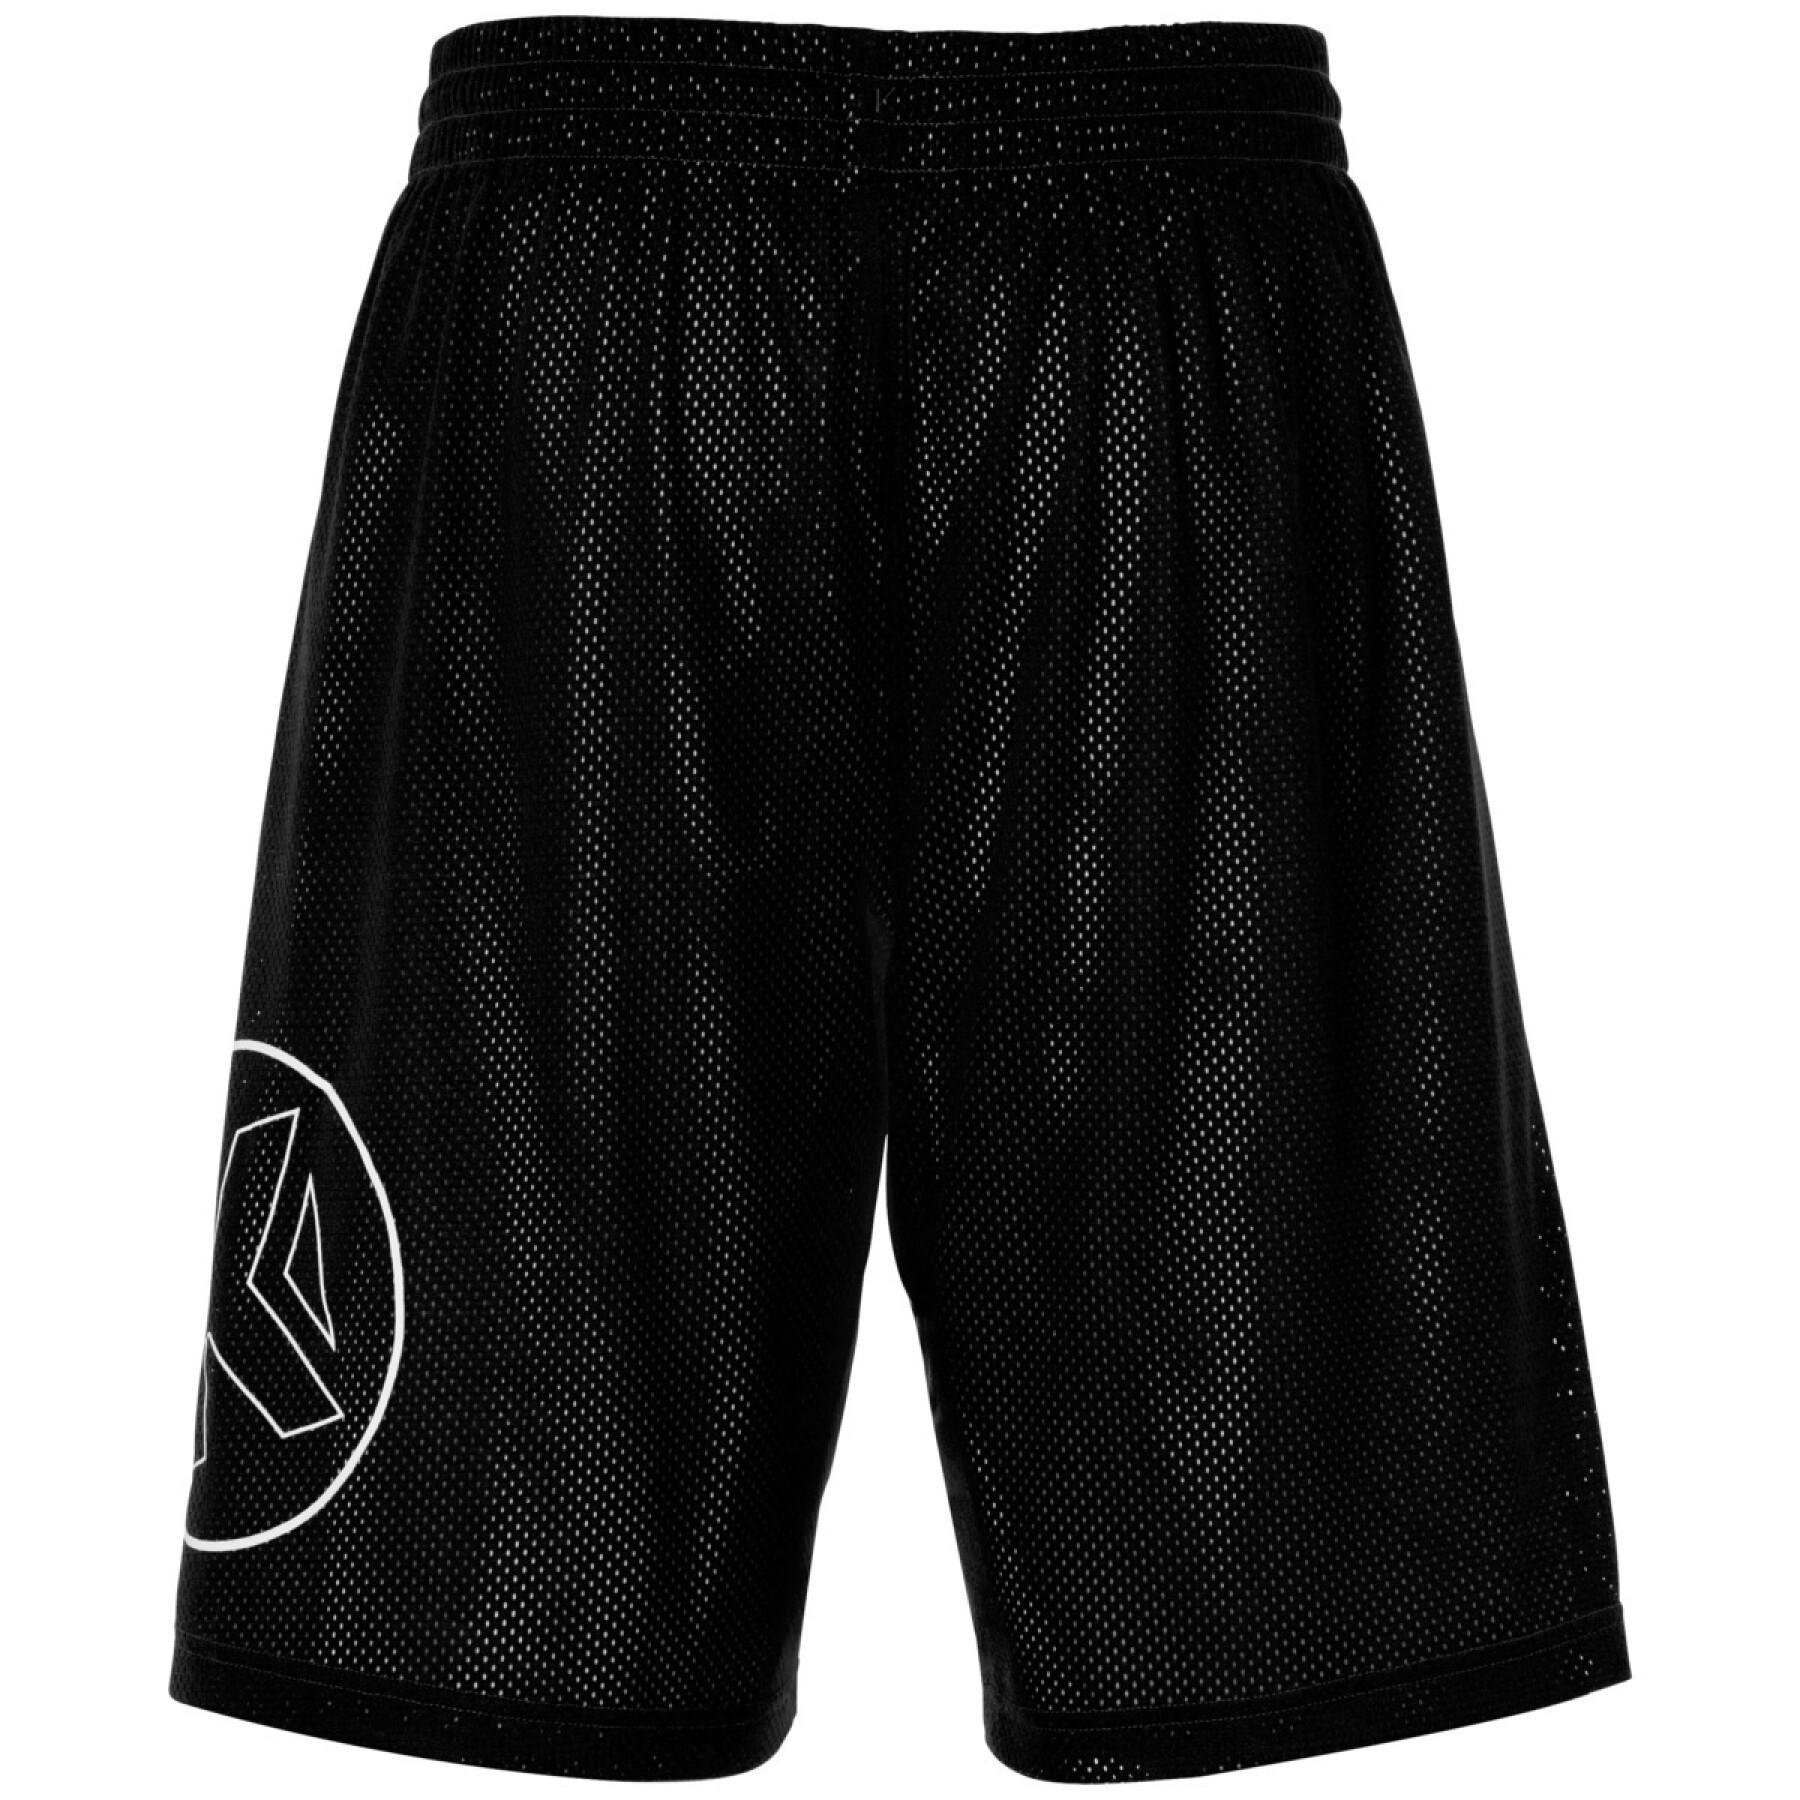 Spalding Reversible Shorts Black